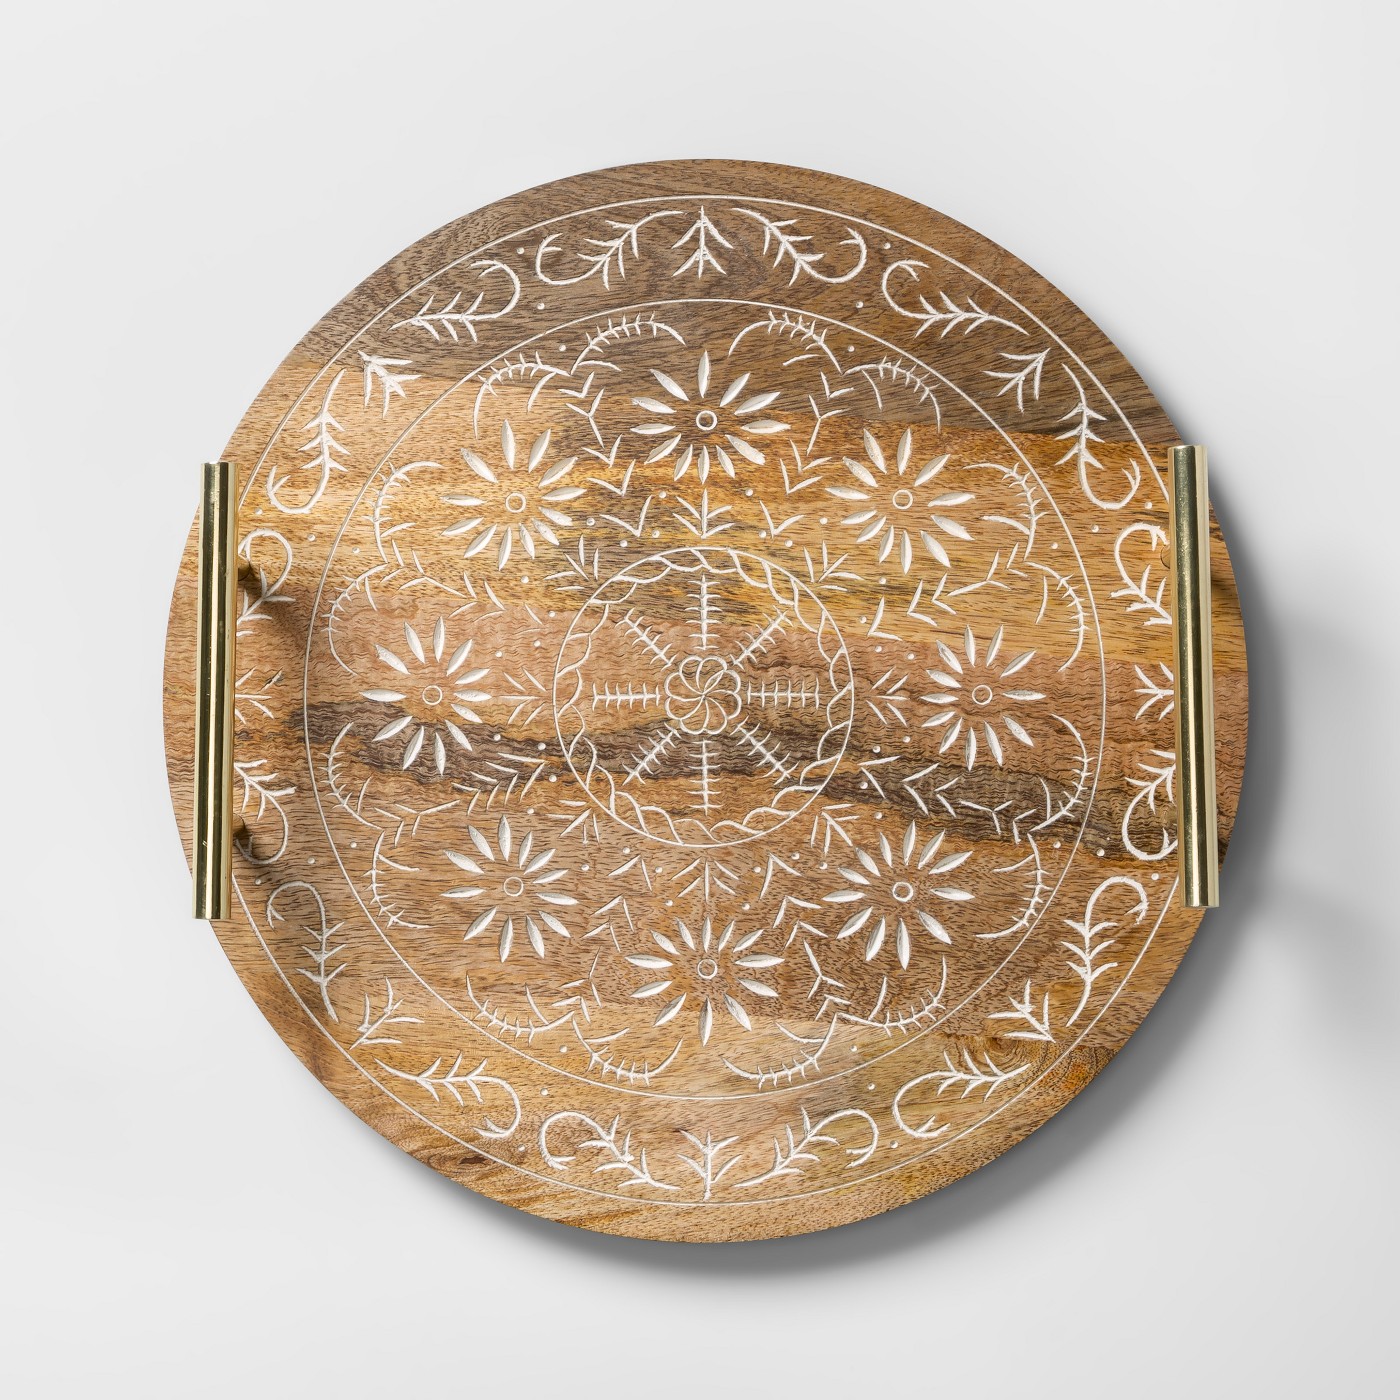 Opalhouse Round Mango Wood Embellished Serving Tray with Handles